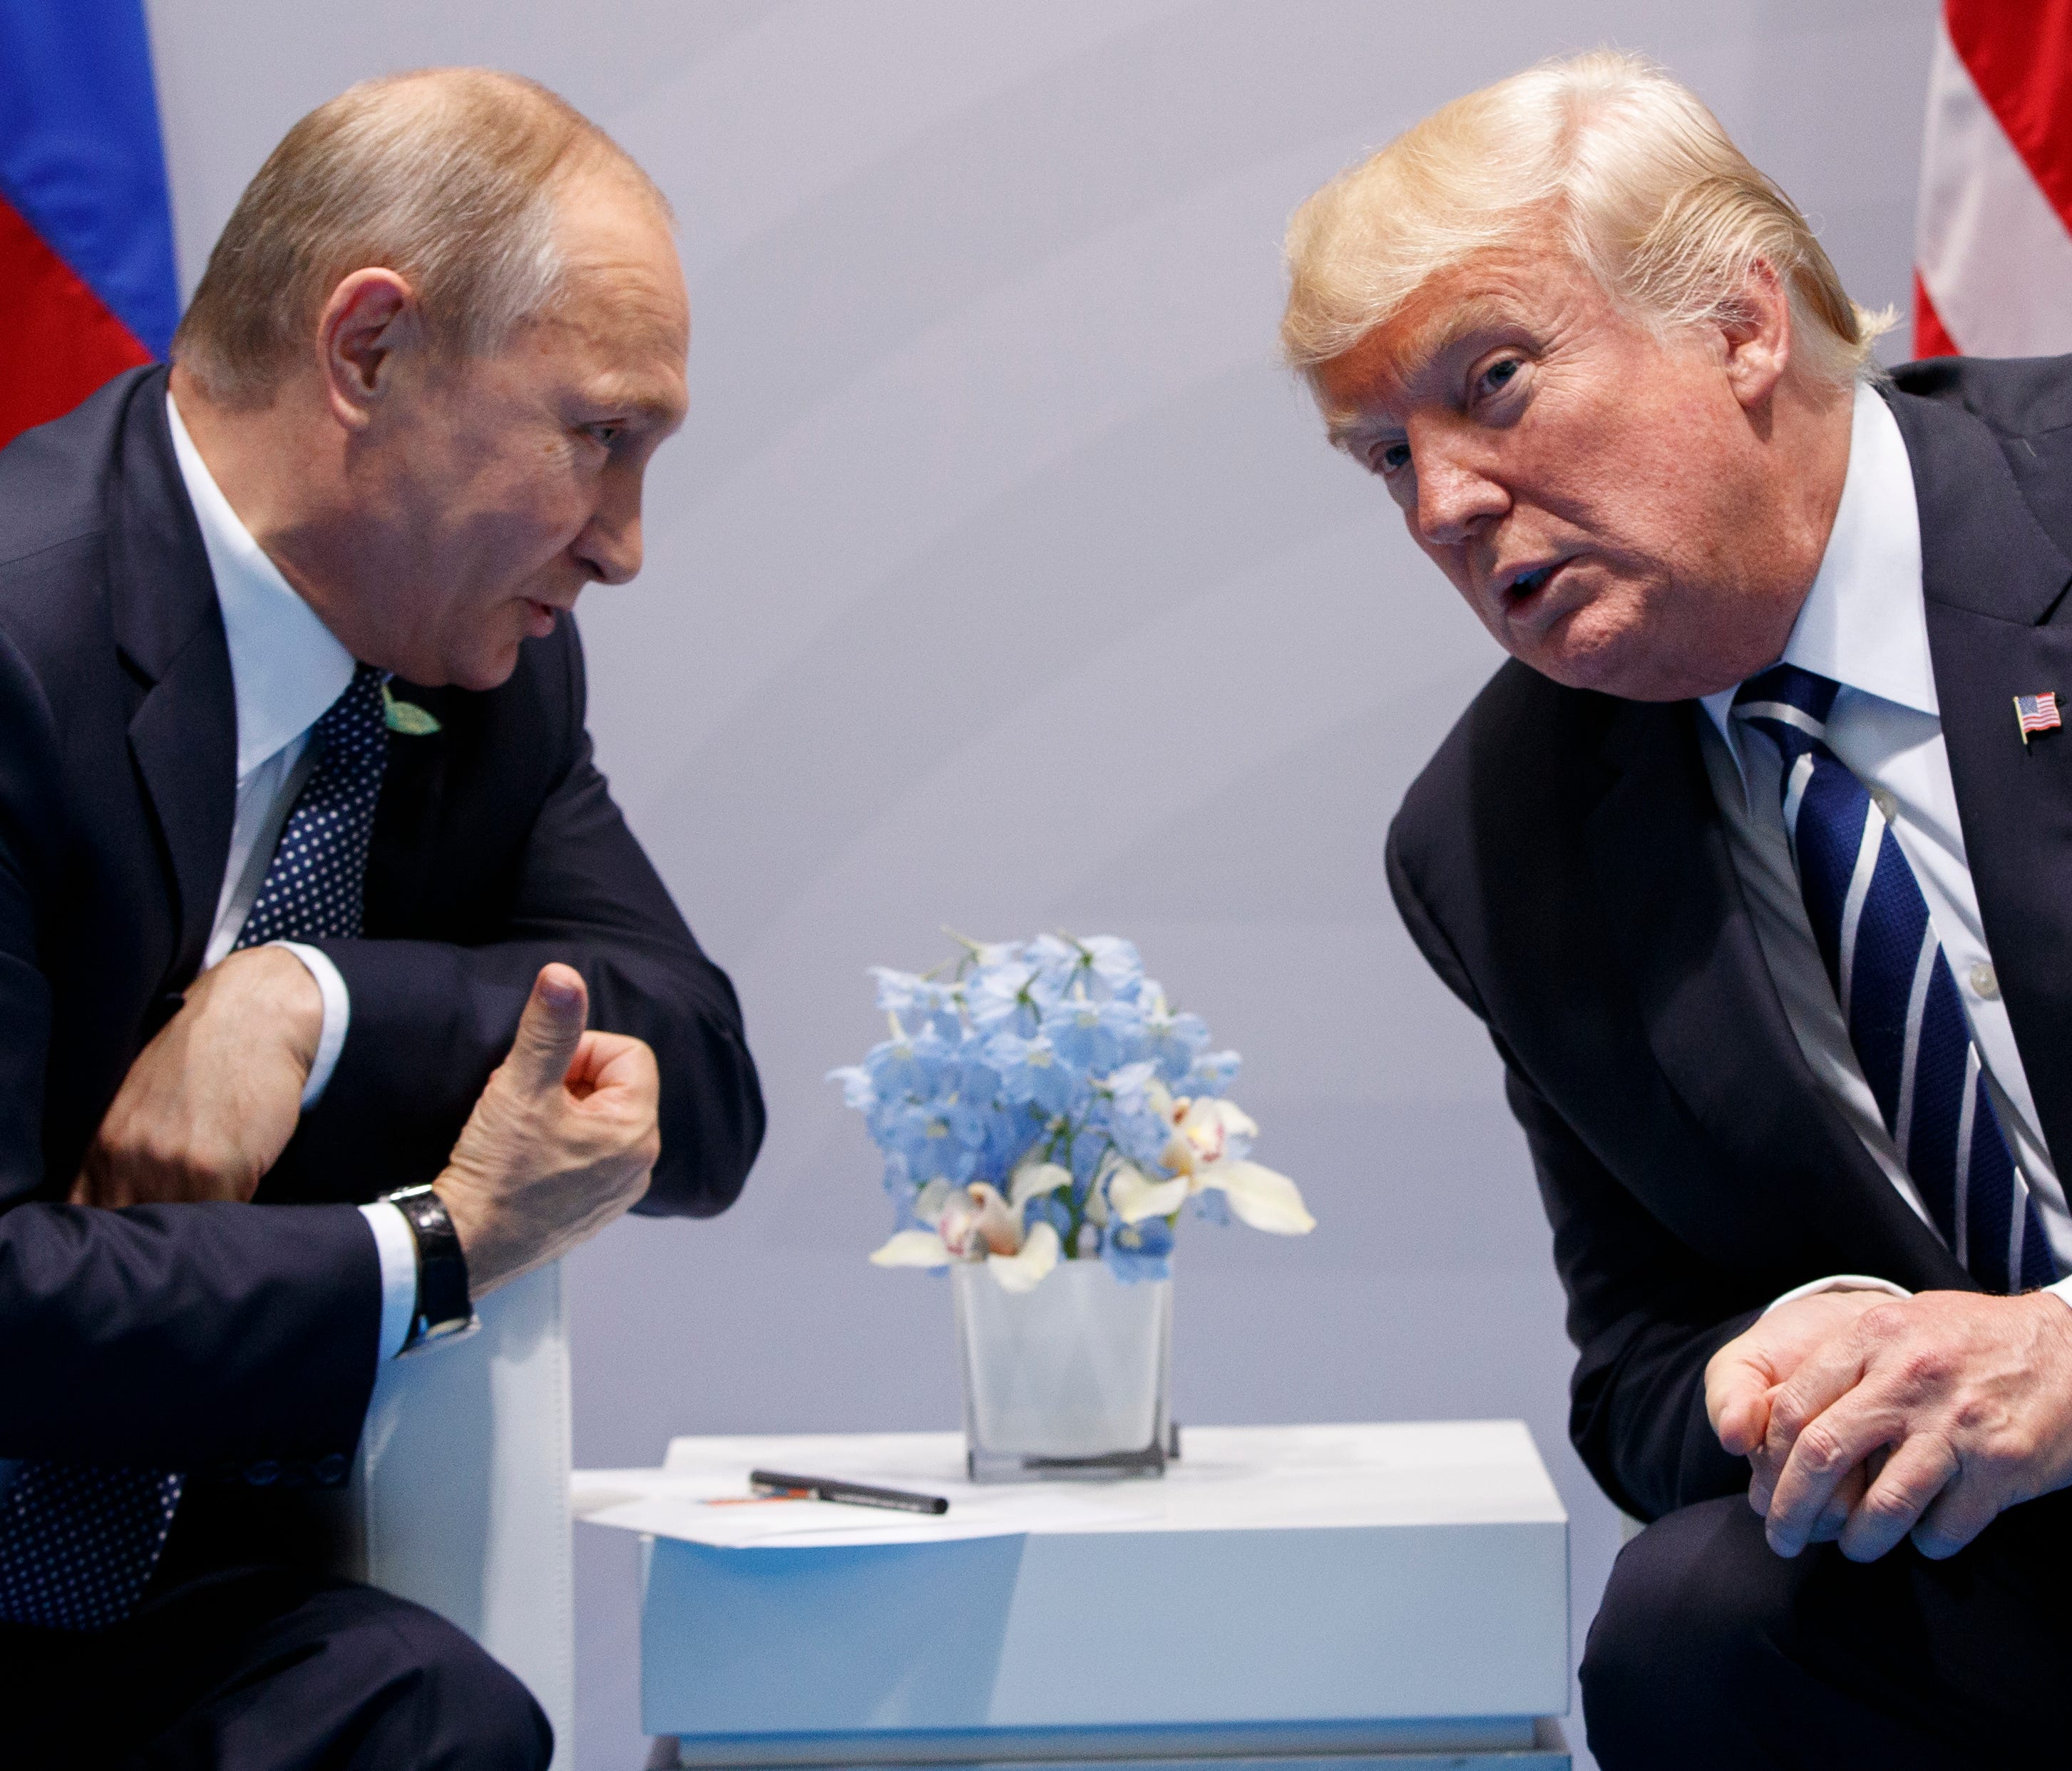 President Trump meets with Russian President Vladimir Putin at the G-20 Summit in Hamburg, July 7, 2017.